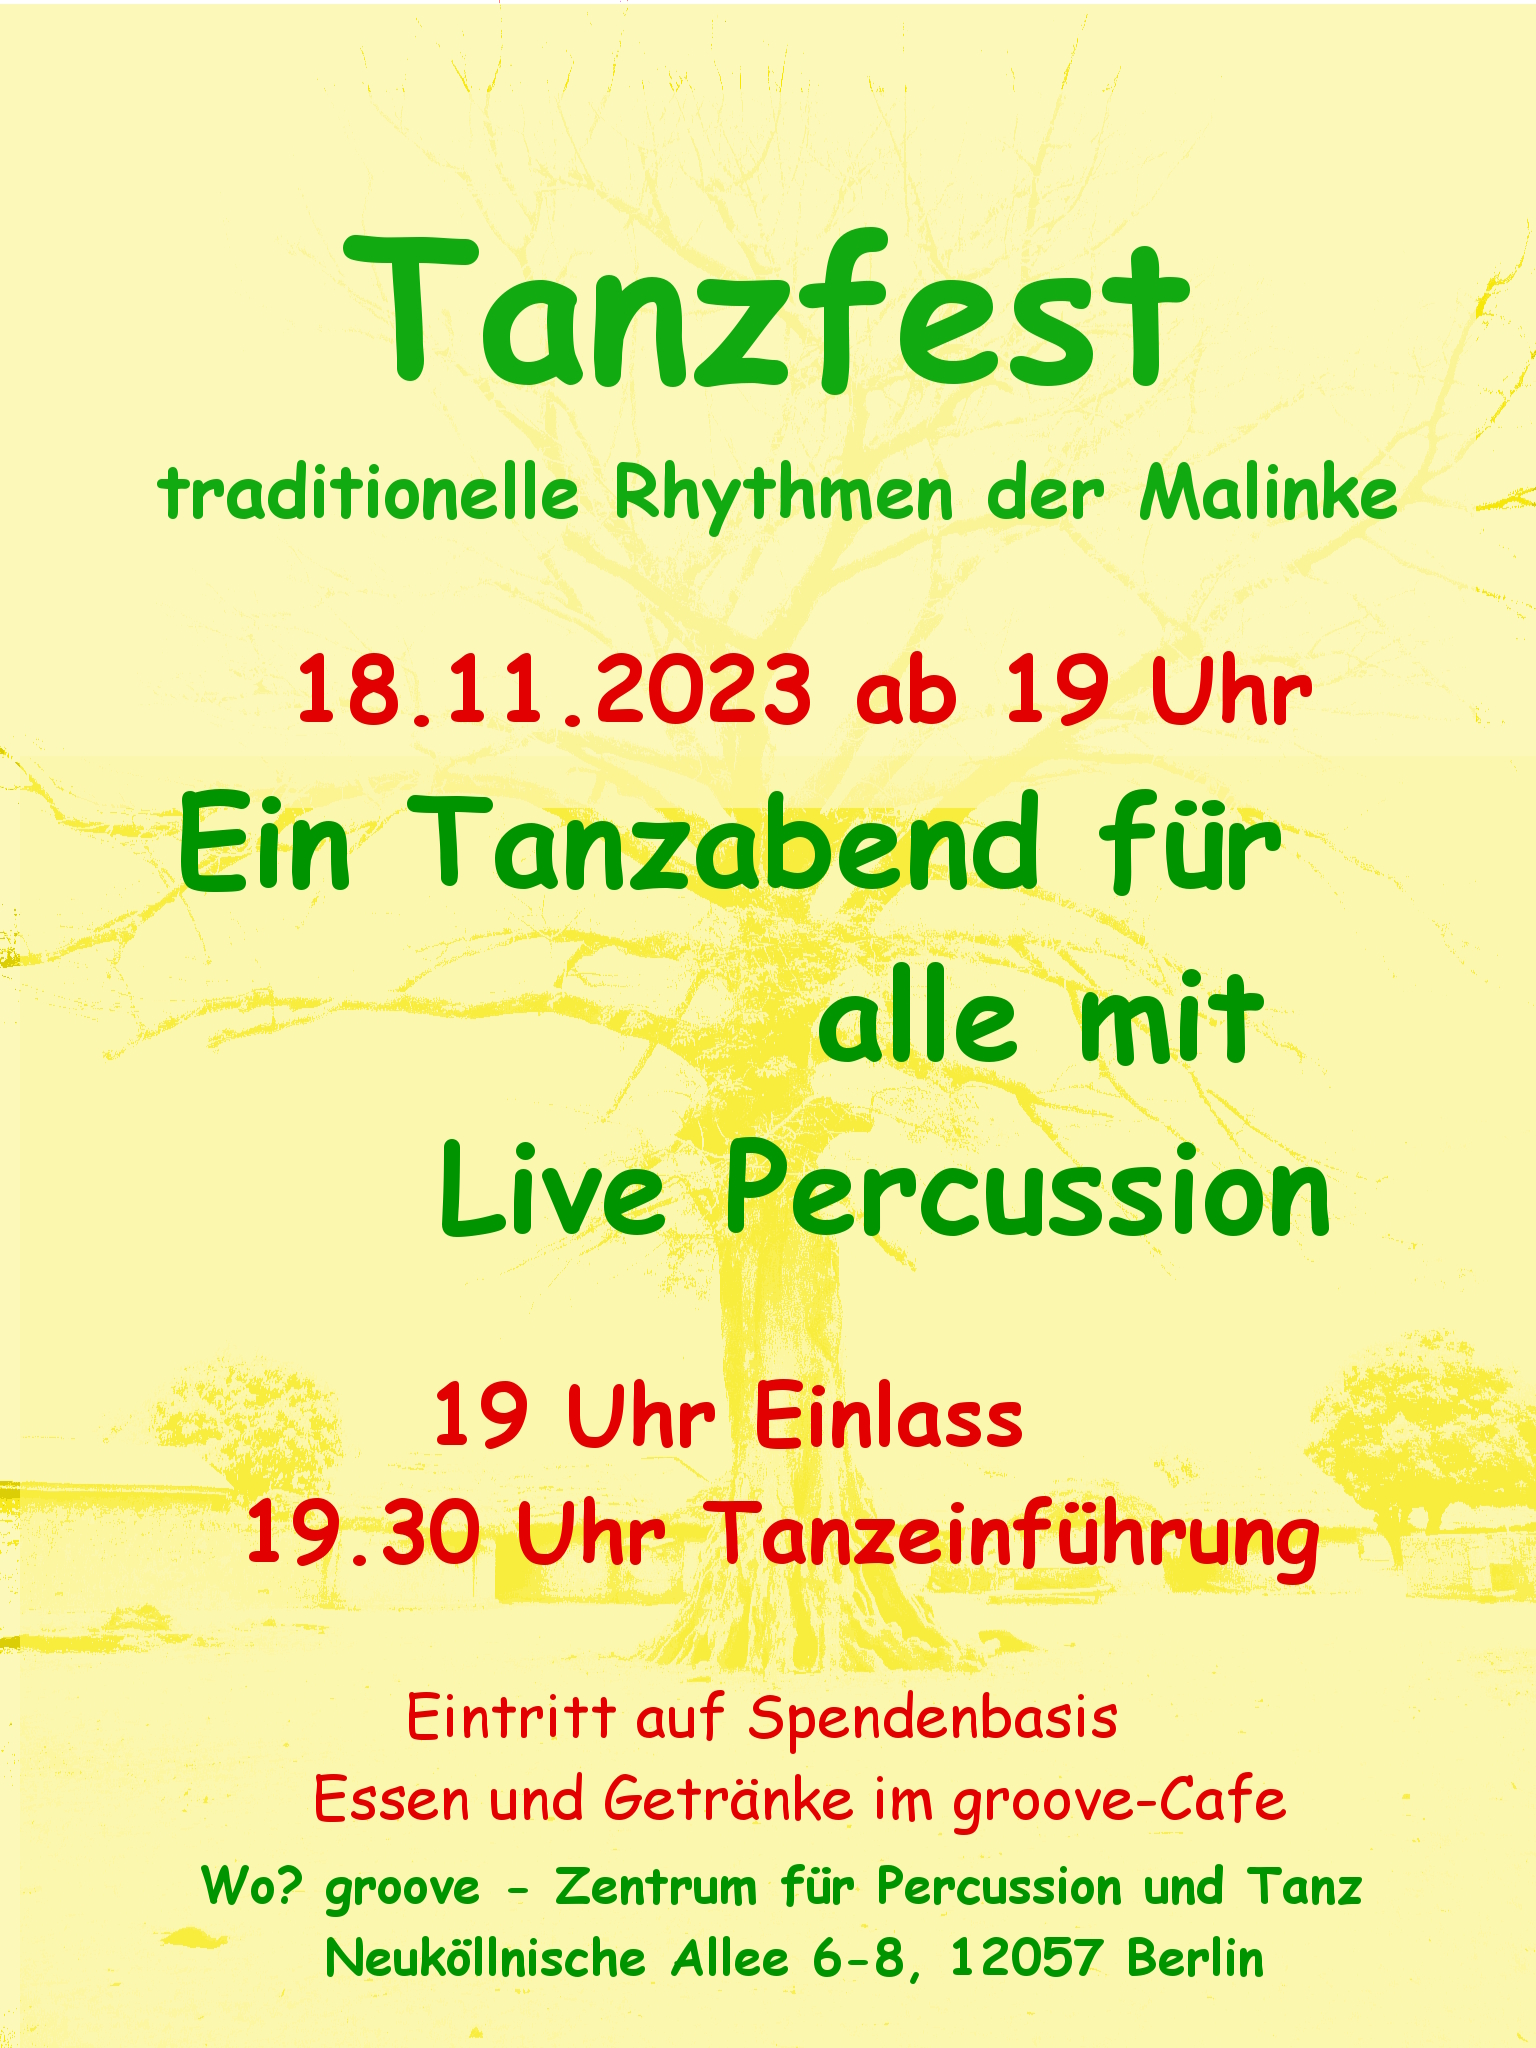 Tanzfest 2023